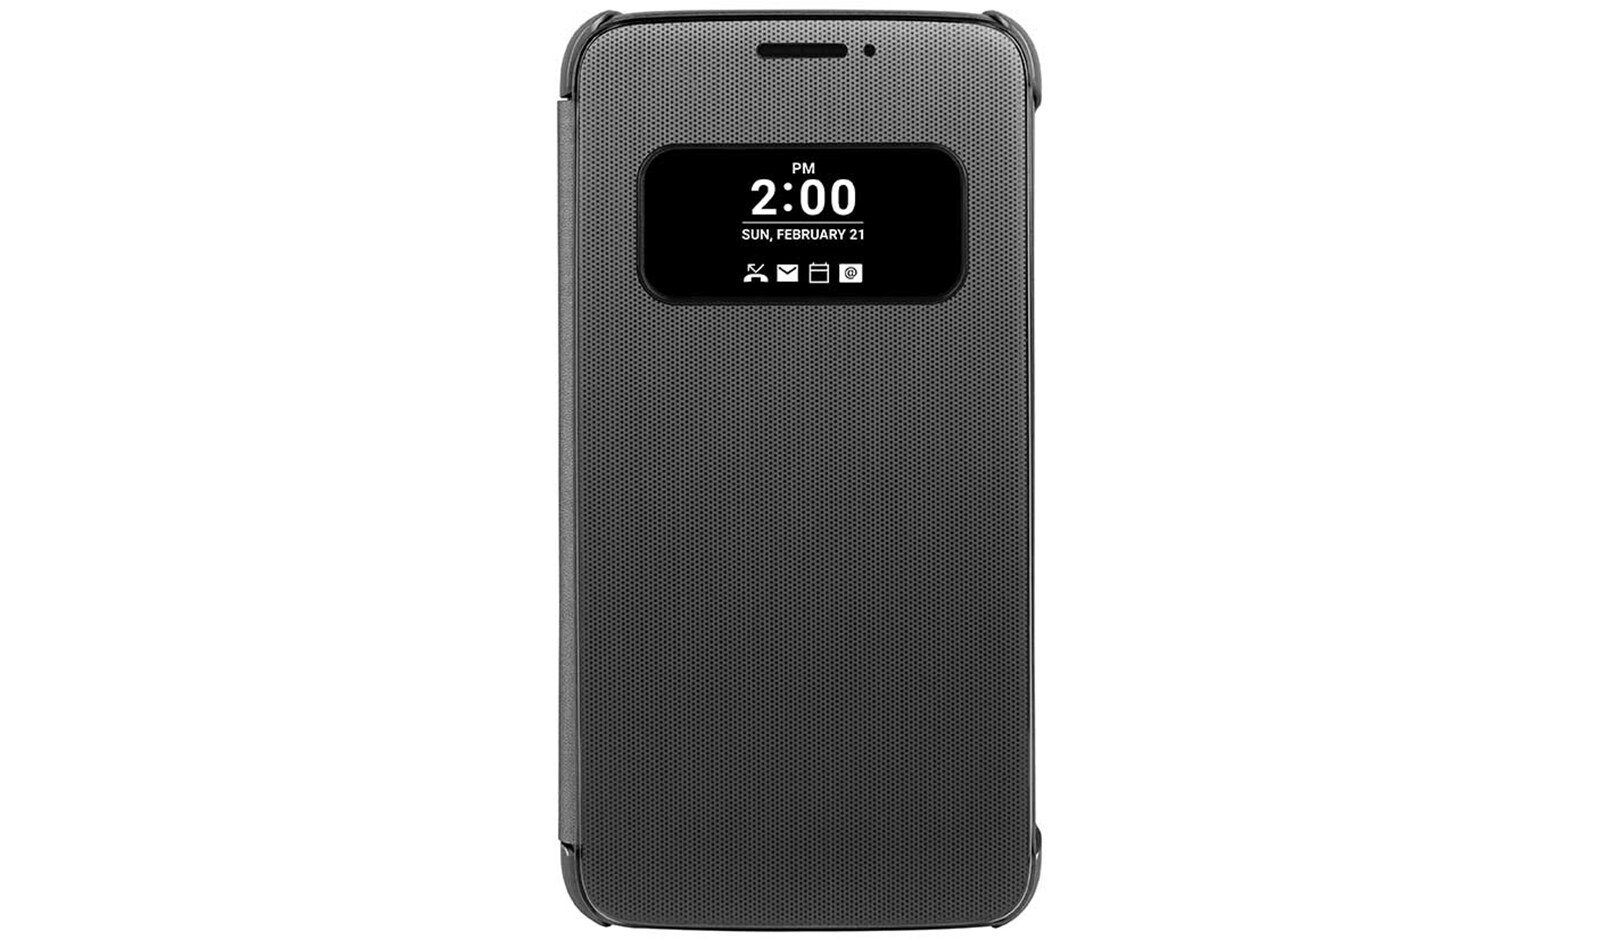 LG Étui Quick Cover du LG G5 - Titane, CFV-160 Titane